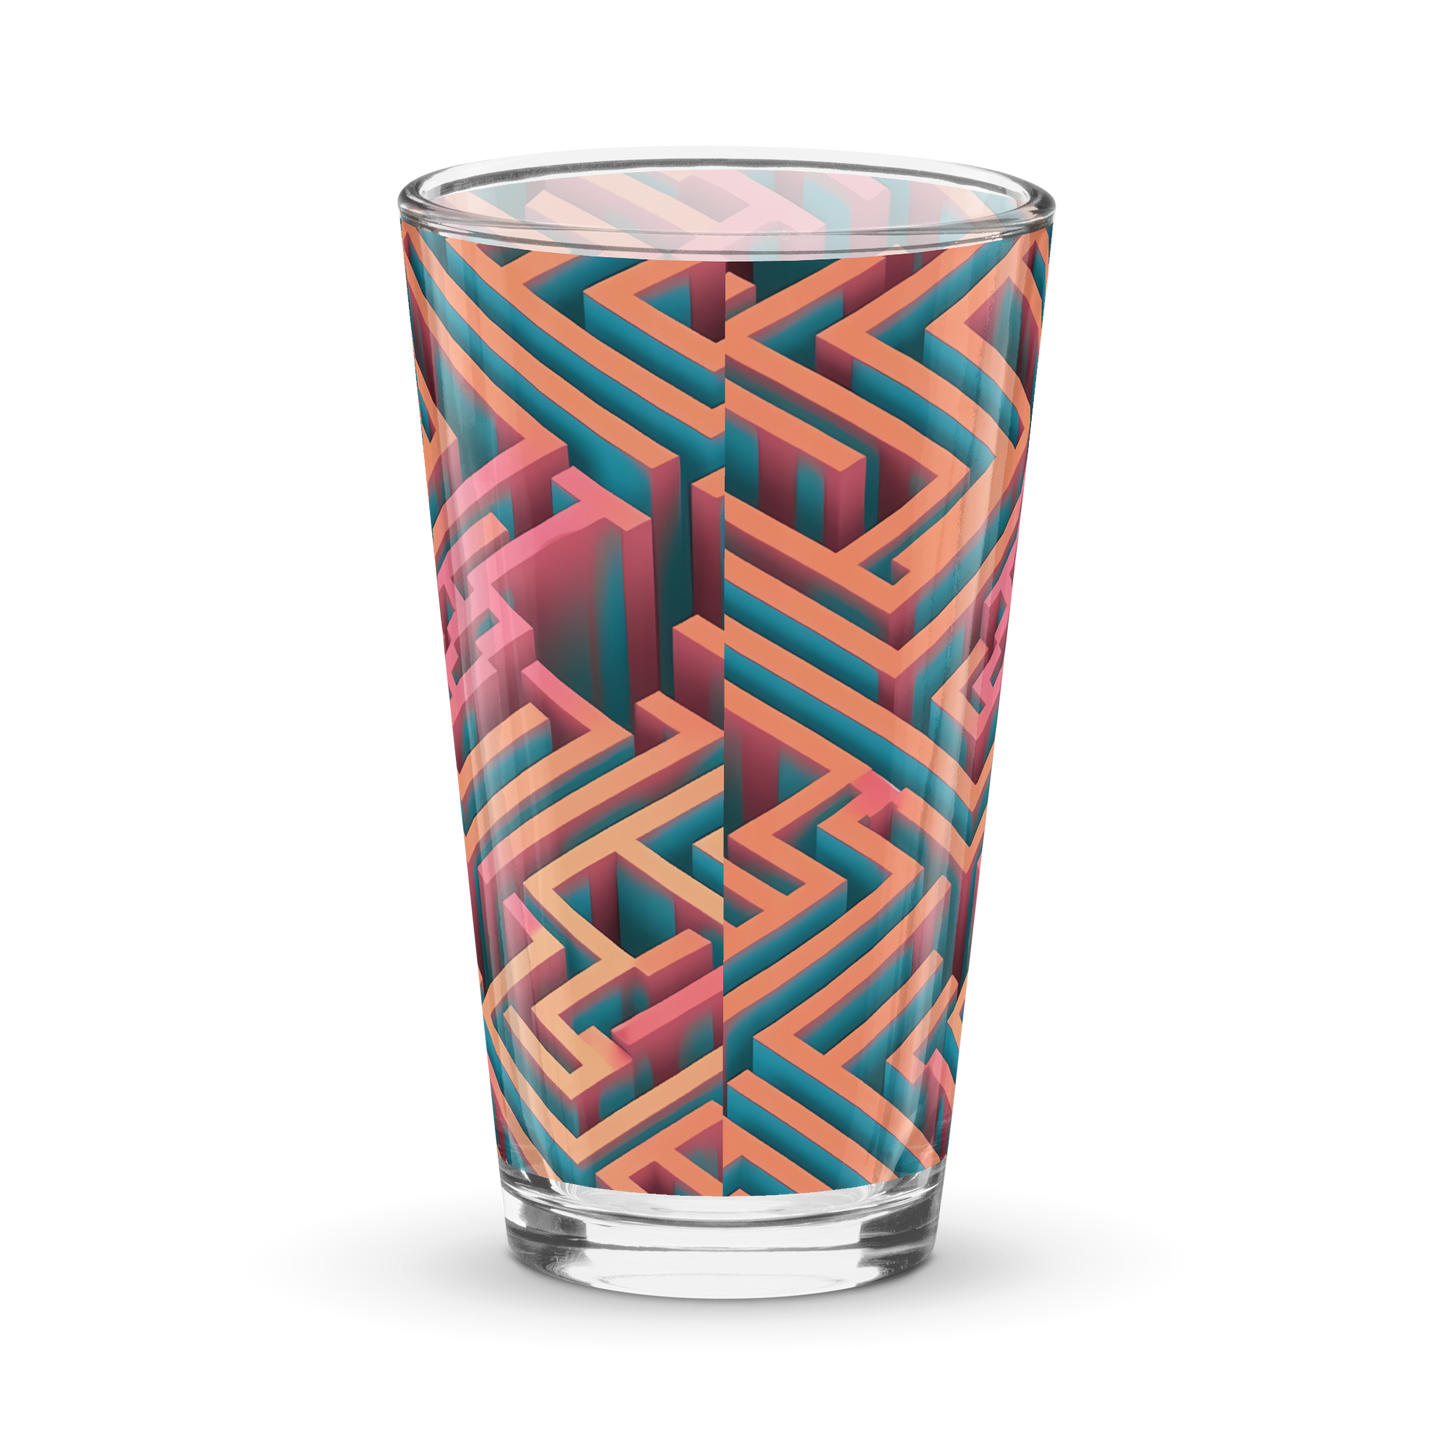 3D Maze Illusion | 3D Patterns | Shaker Pint Glass (16 oz) - #1